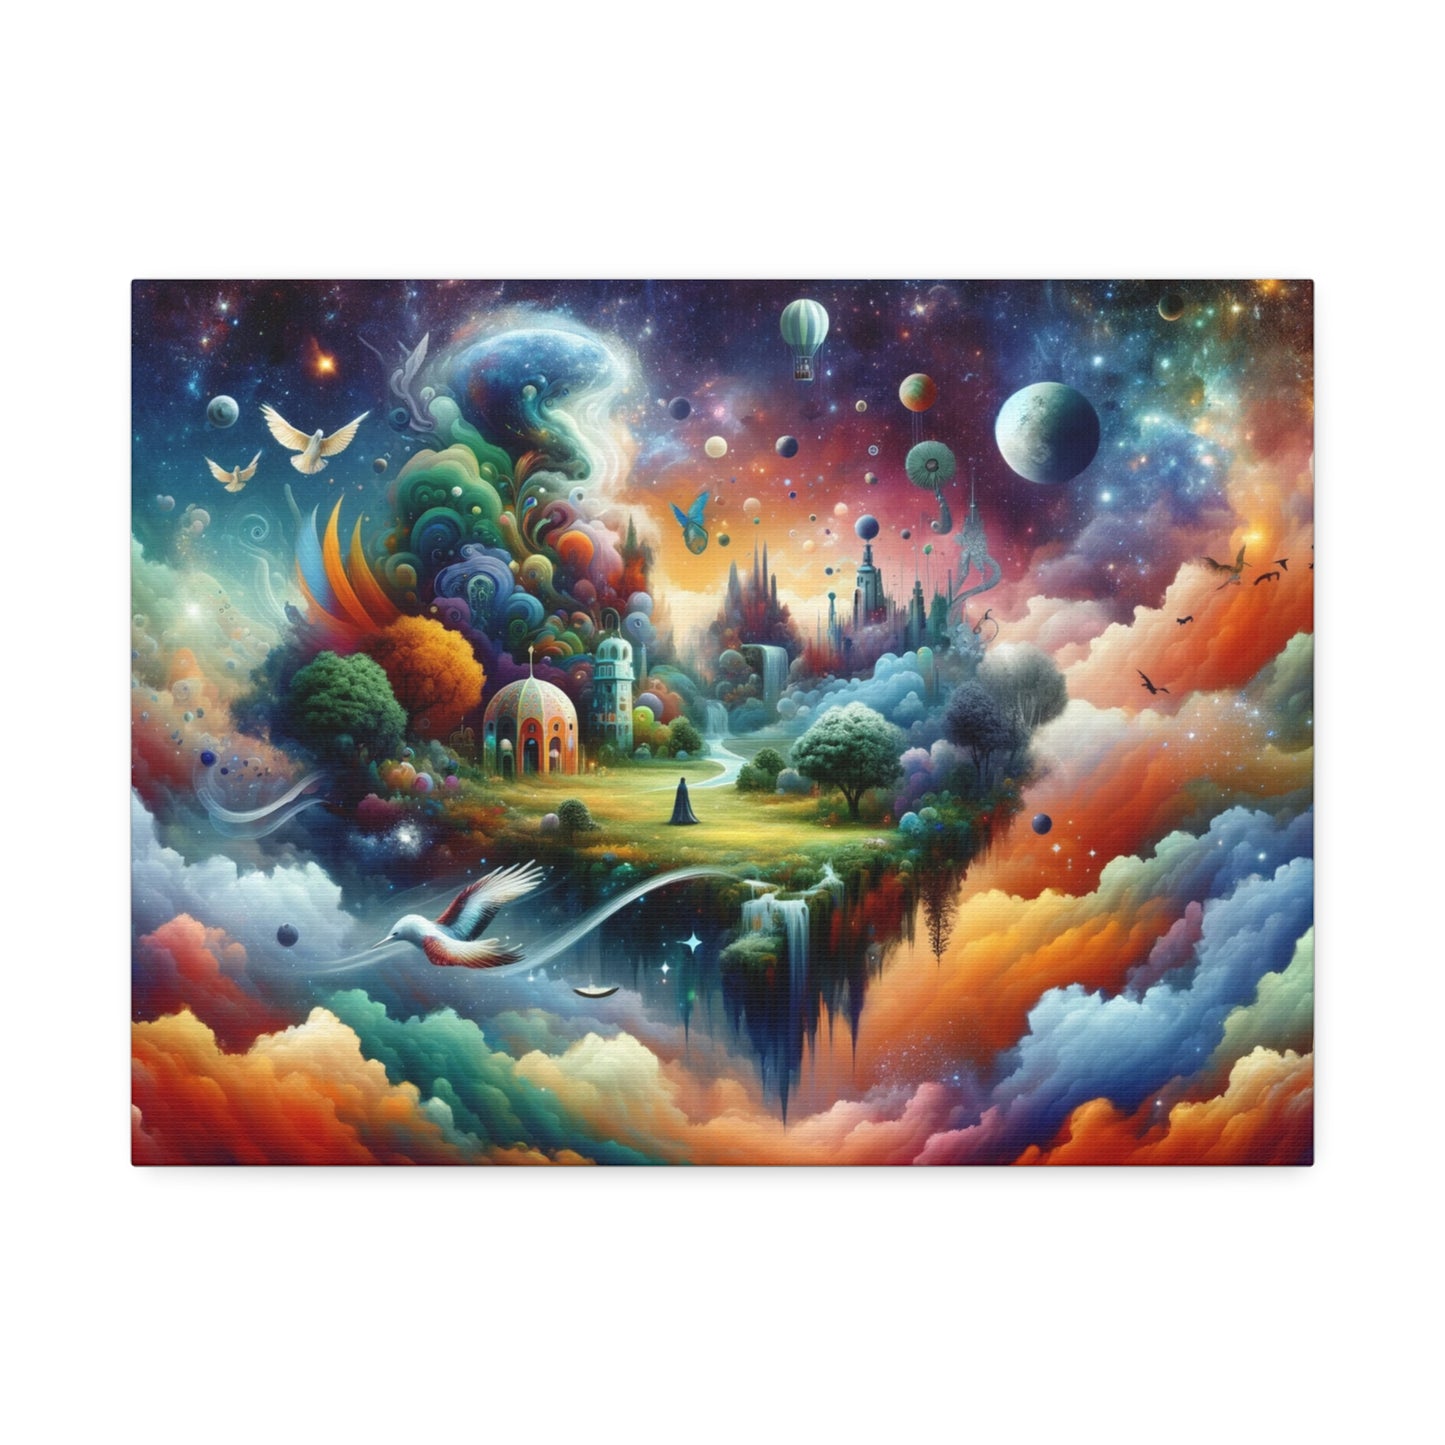 Dreamscape Fantasy Canvas Art - Surreal World of Reality and Fantasy